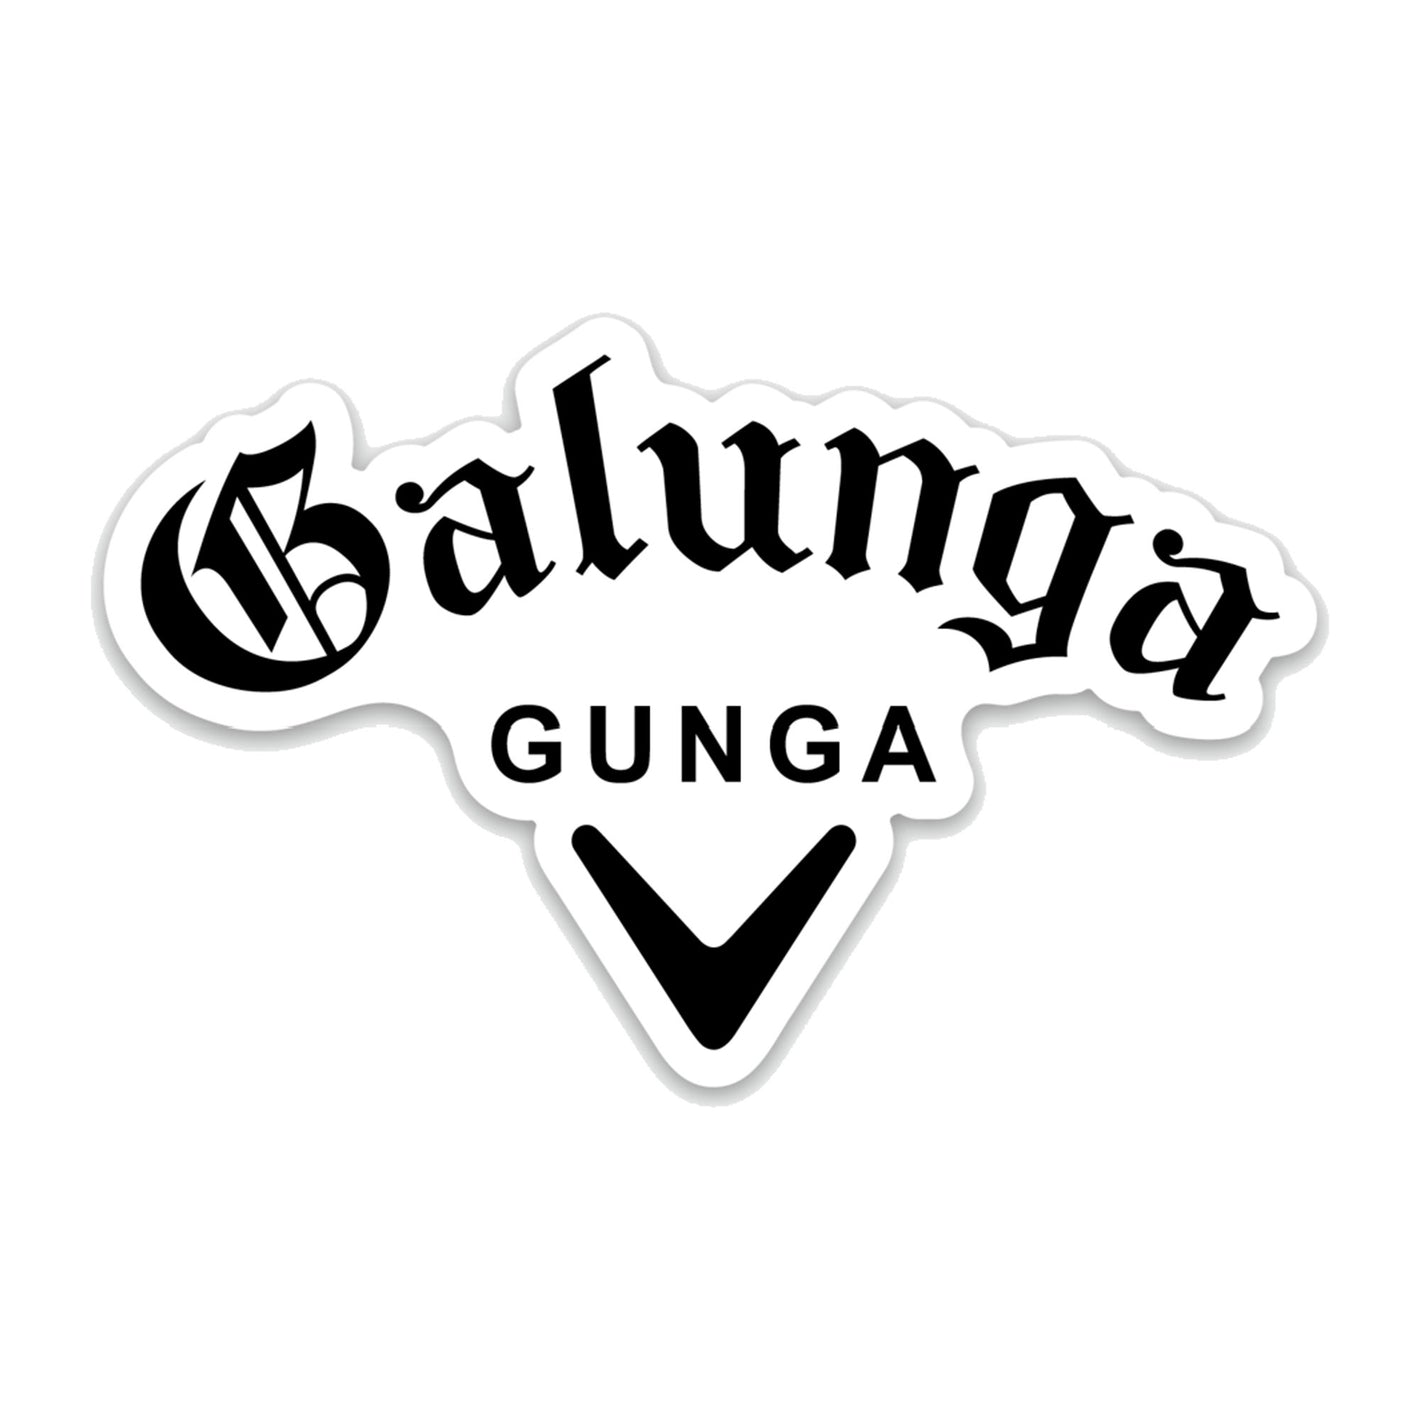 Galunga Gunga Decal